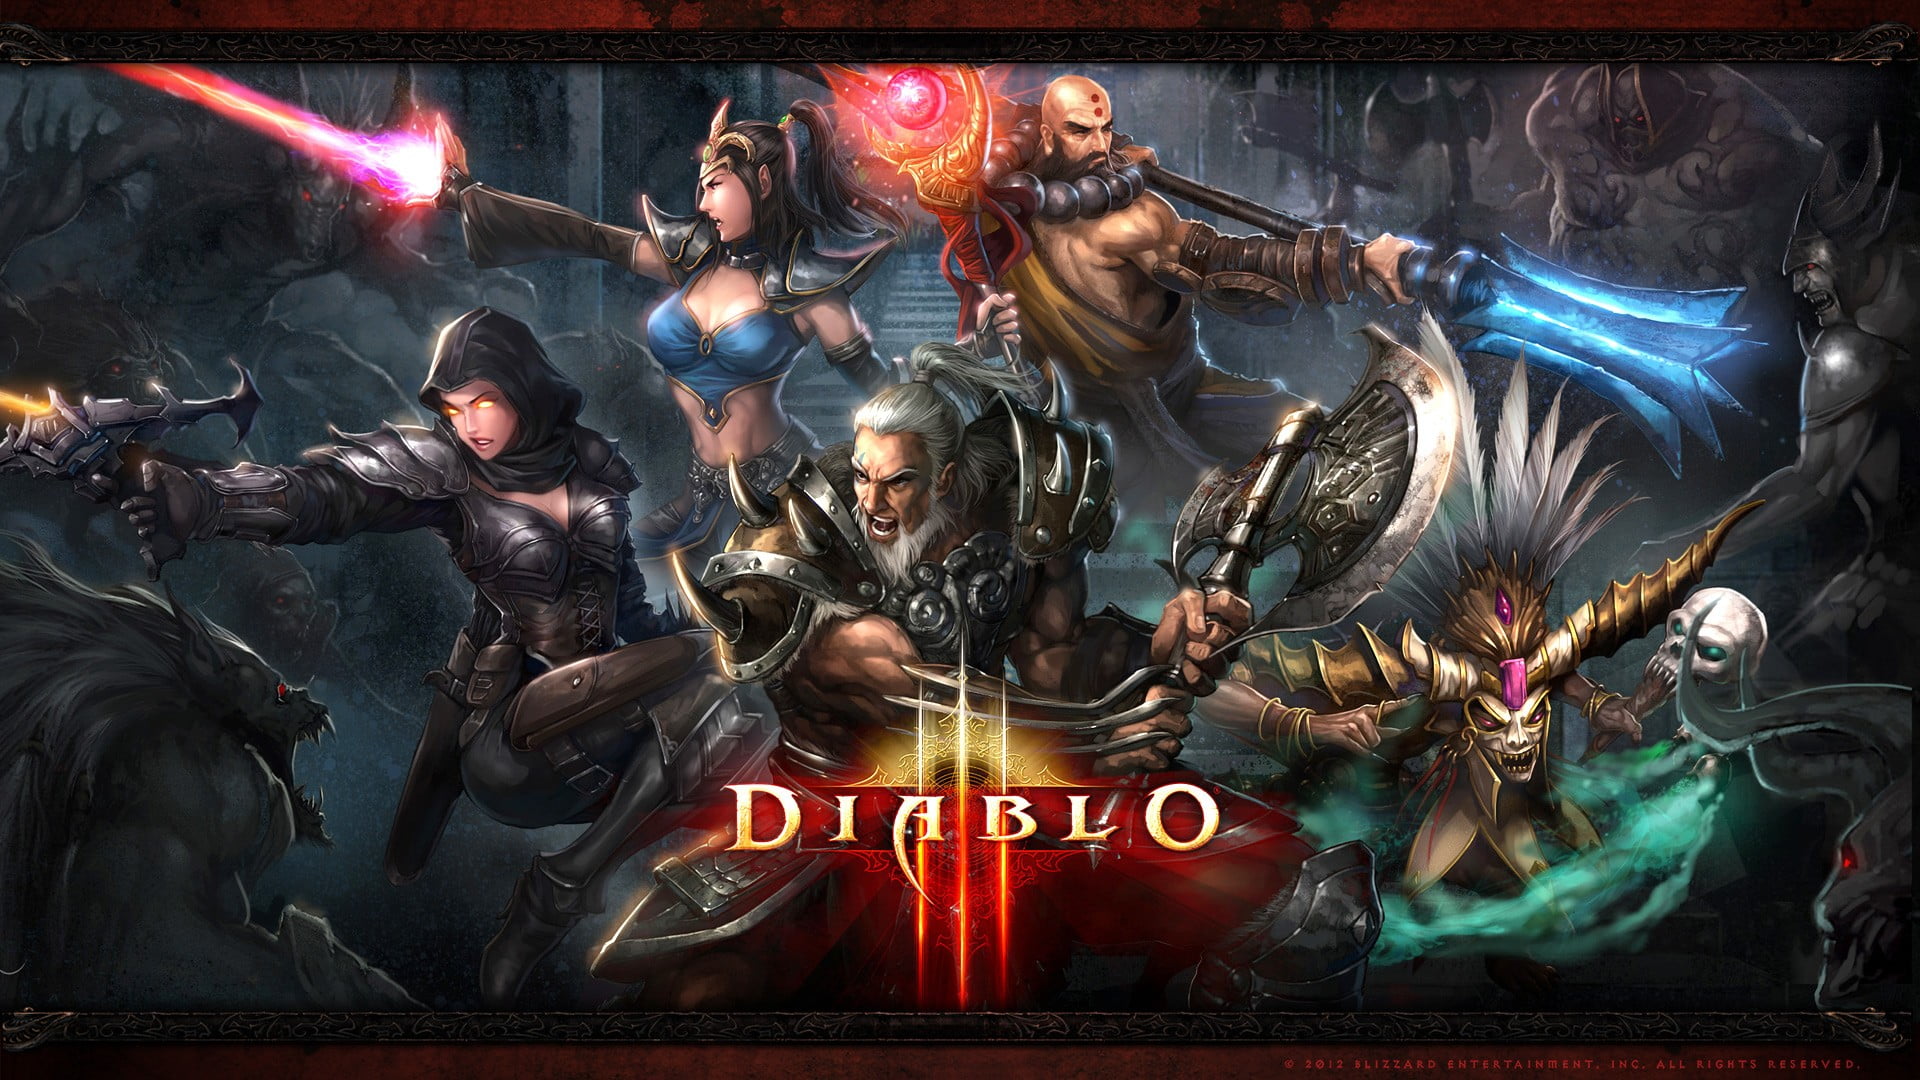 Diablo digital wallpaper, Blizzard Entertainment, Diablo, Diablo III